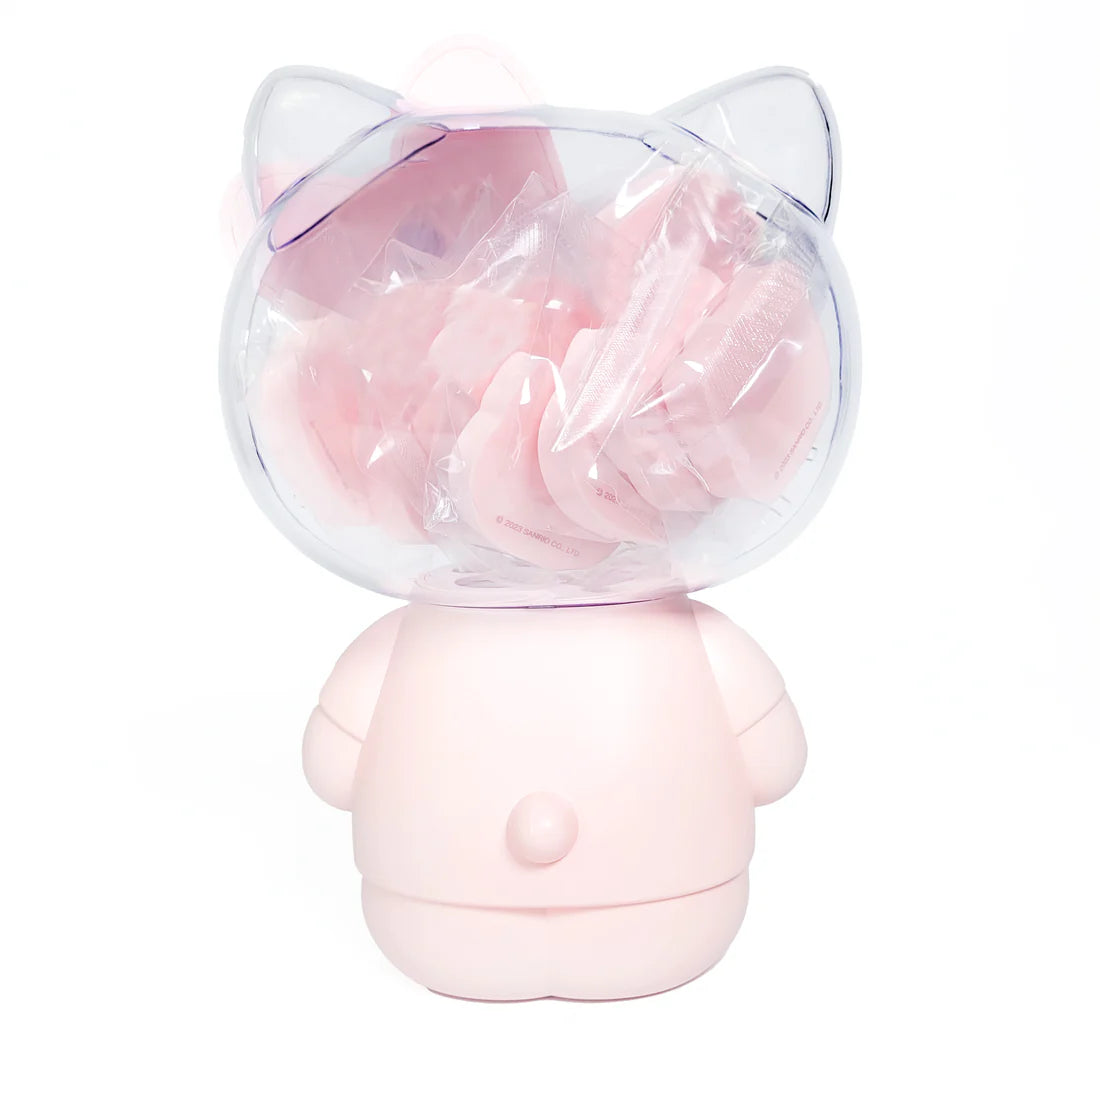 Impressions Vanity - Hello Kitty 12pc Sponge Gift Set Pink